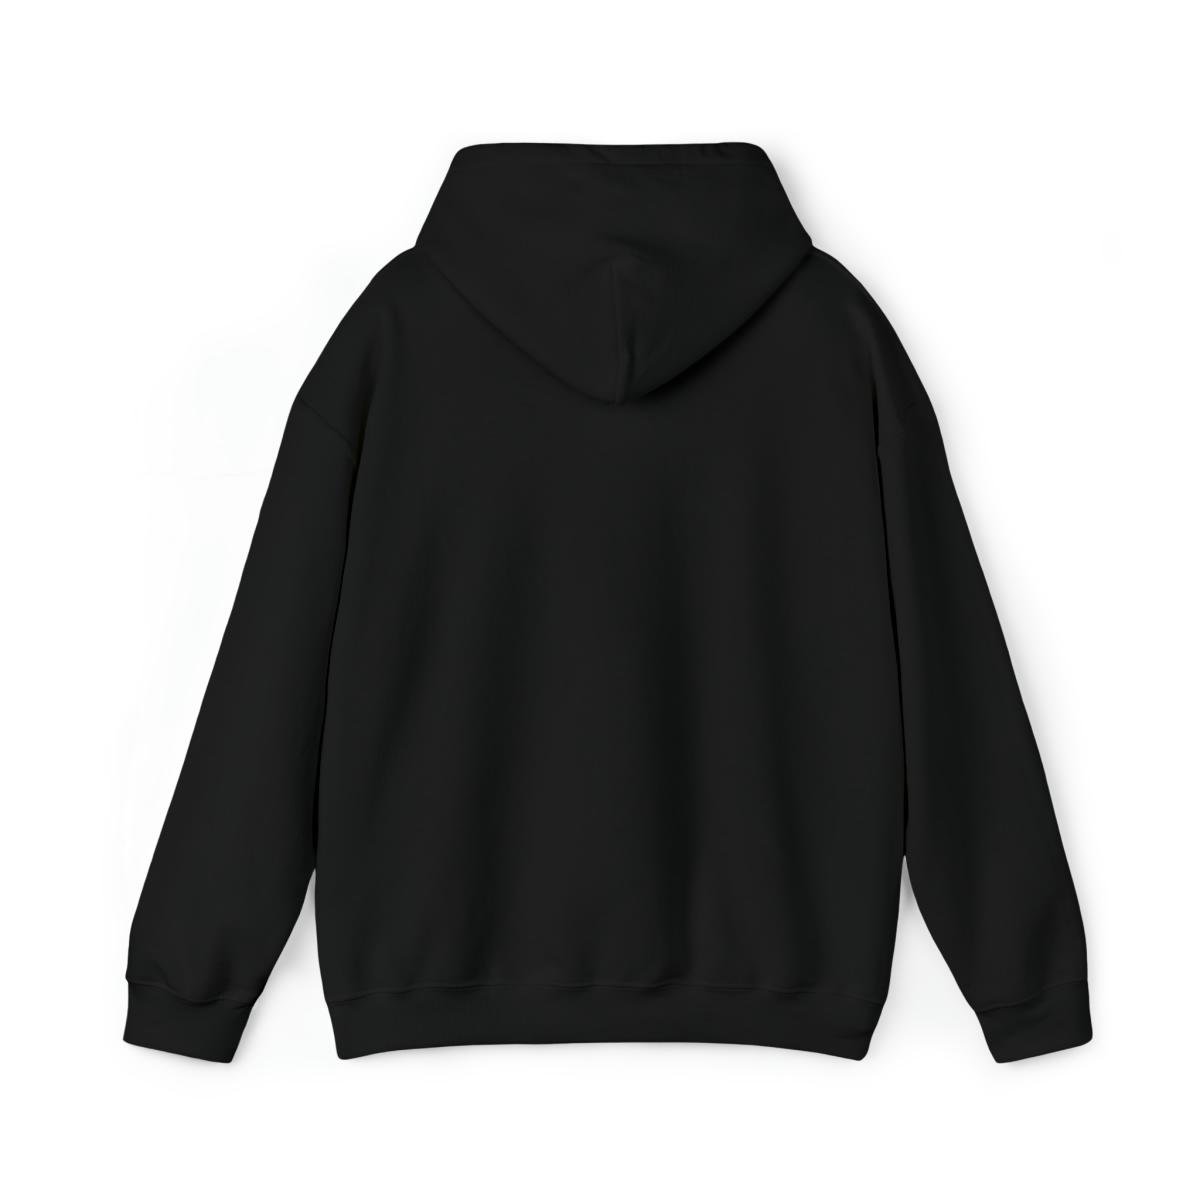 Core Fire – Ascent Hooded Sweatshirt